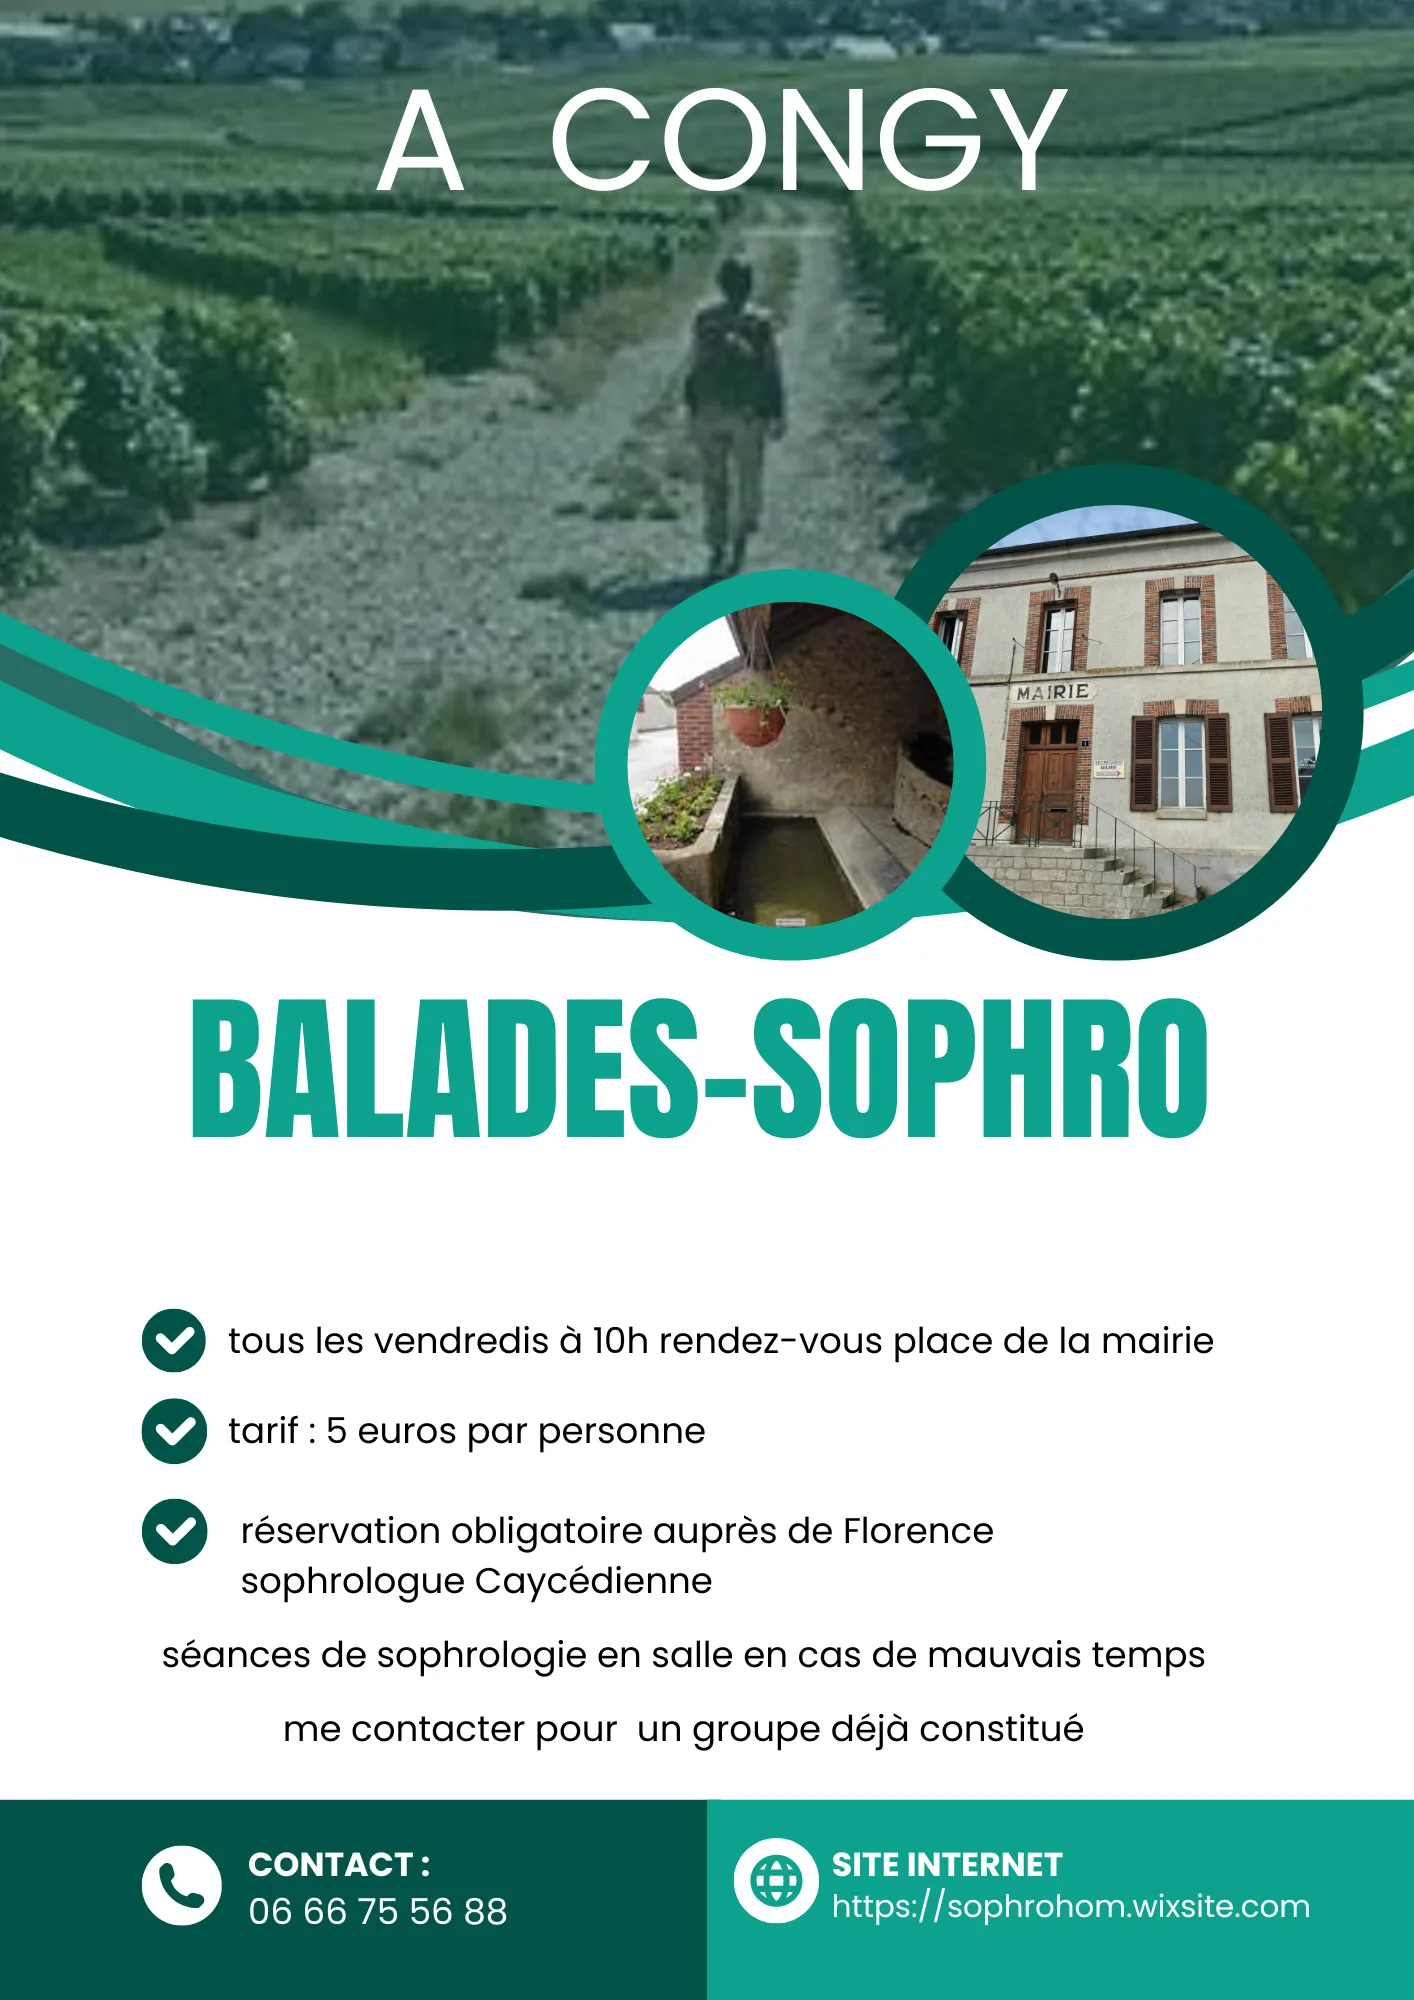 Image qui illustre: Balades Sophro à Congy - 0